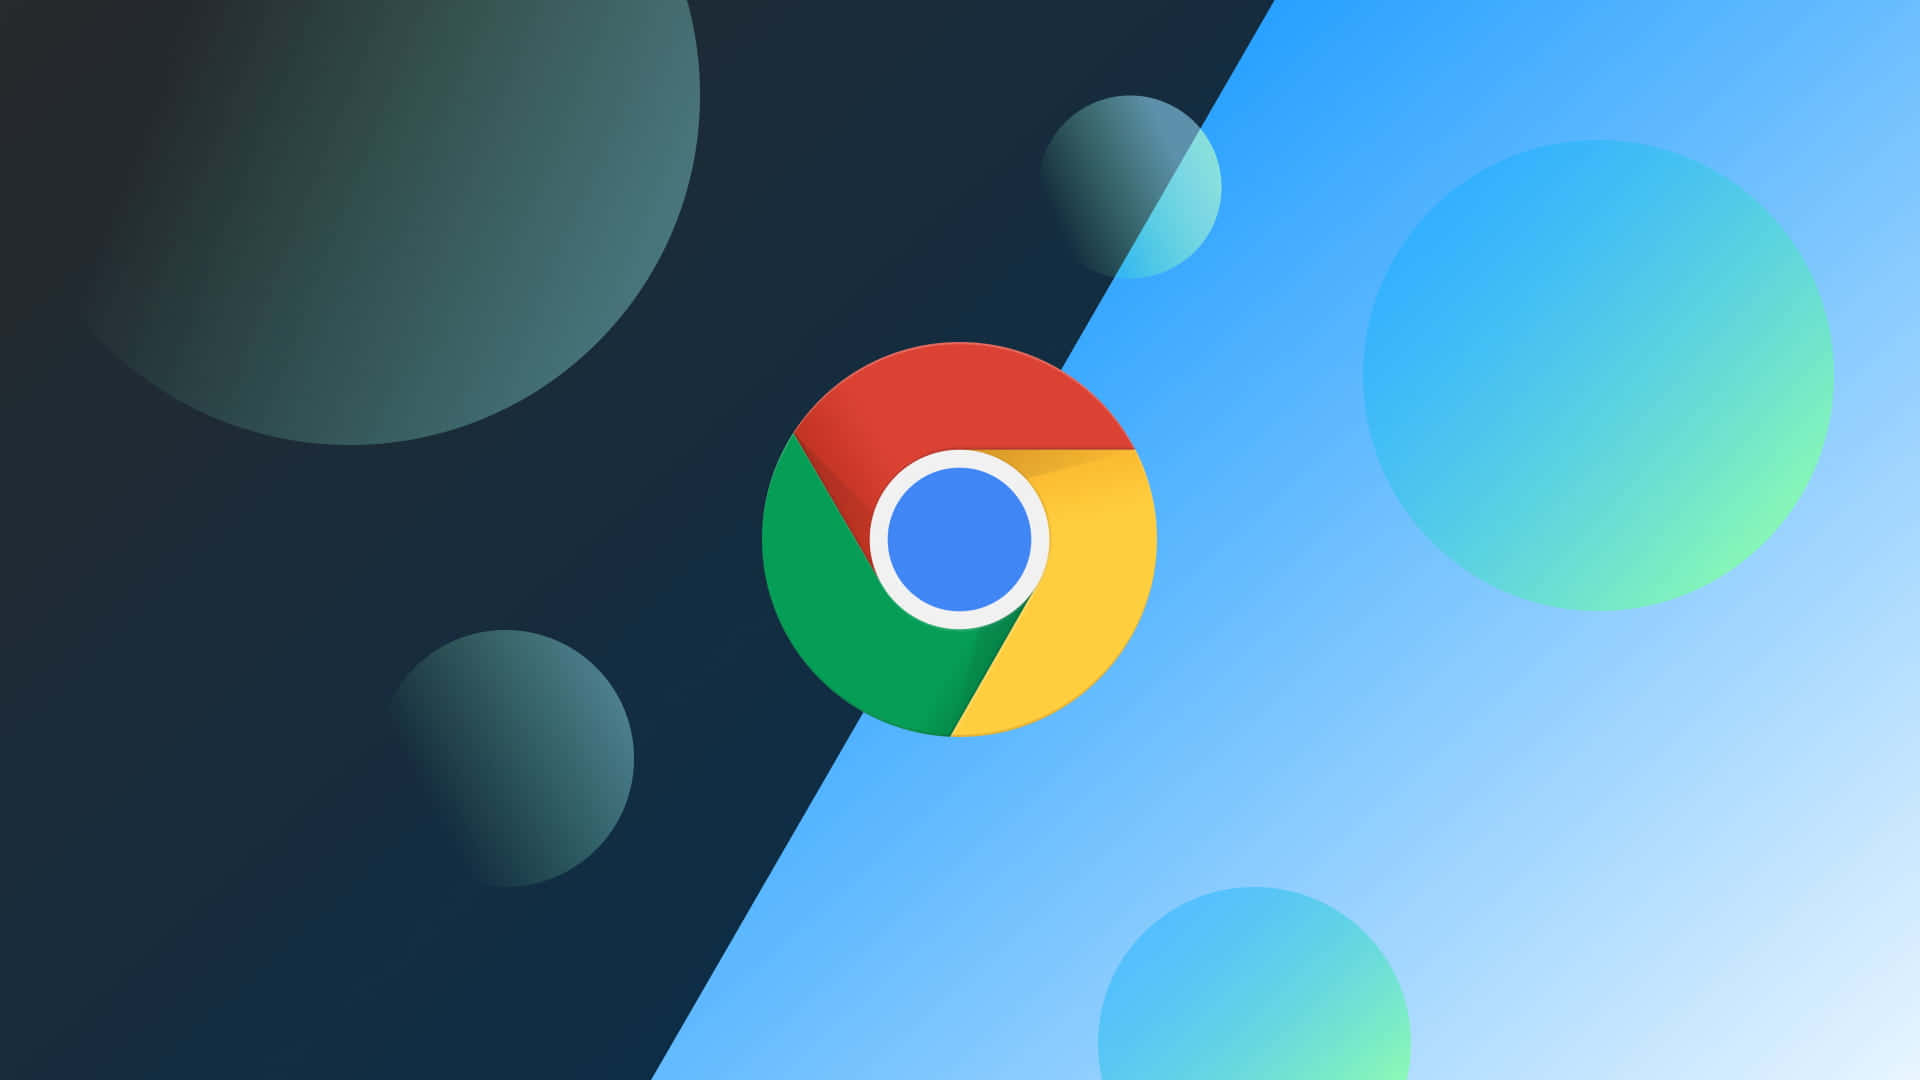 Explore the customizable world of Google Chrome